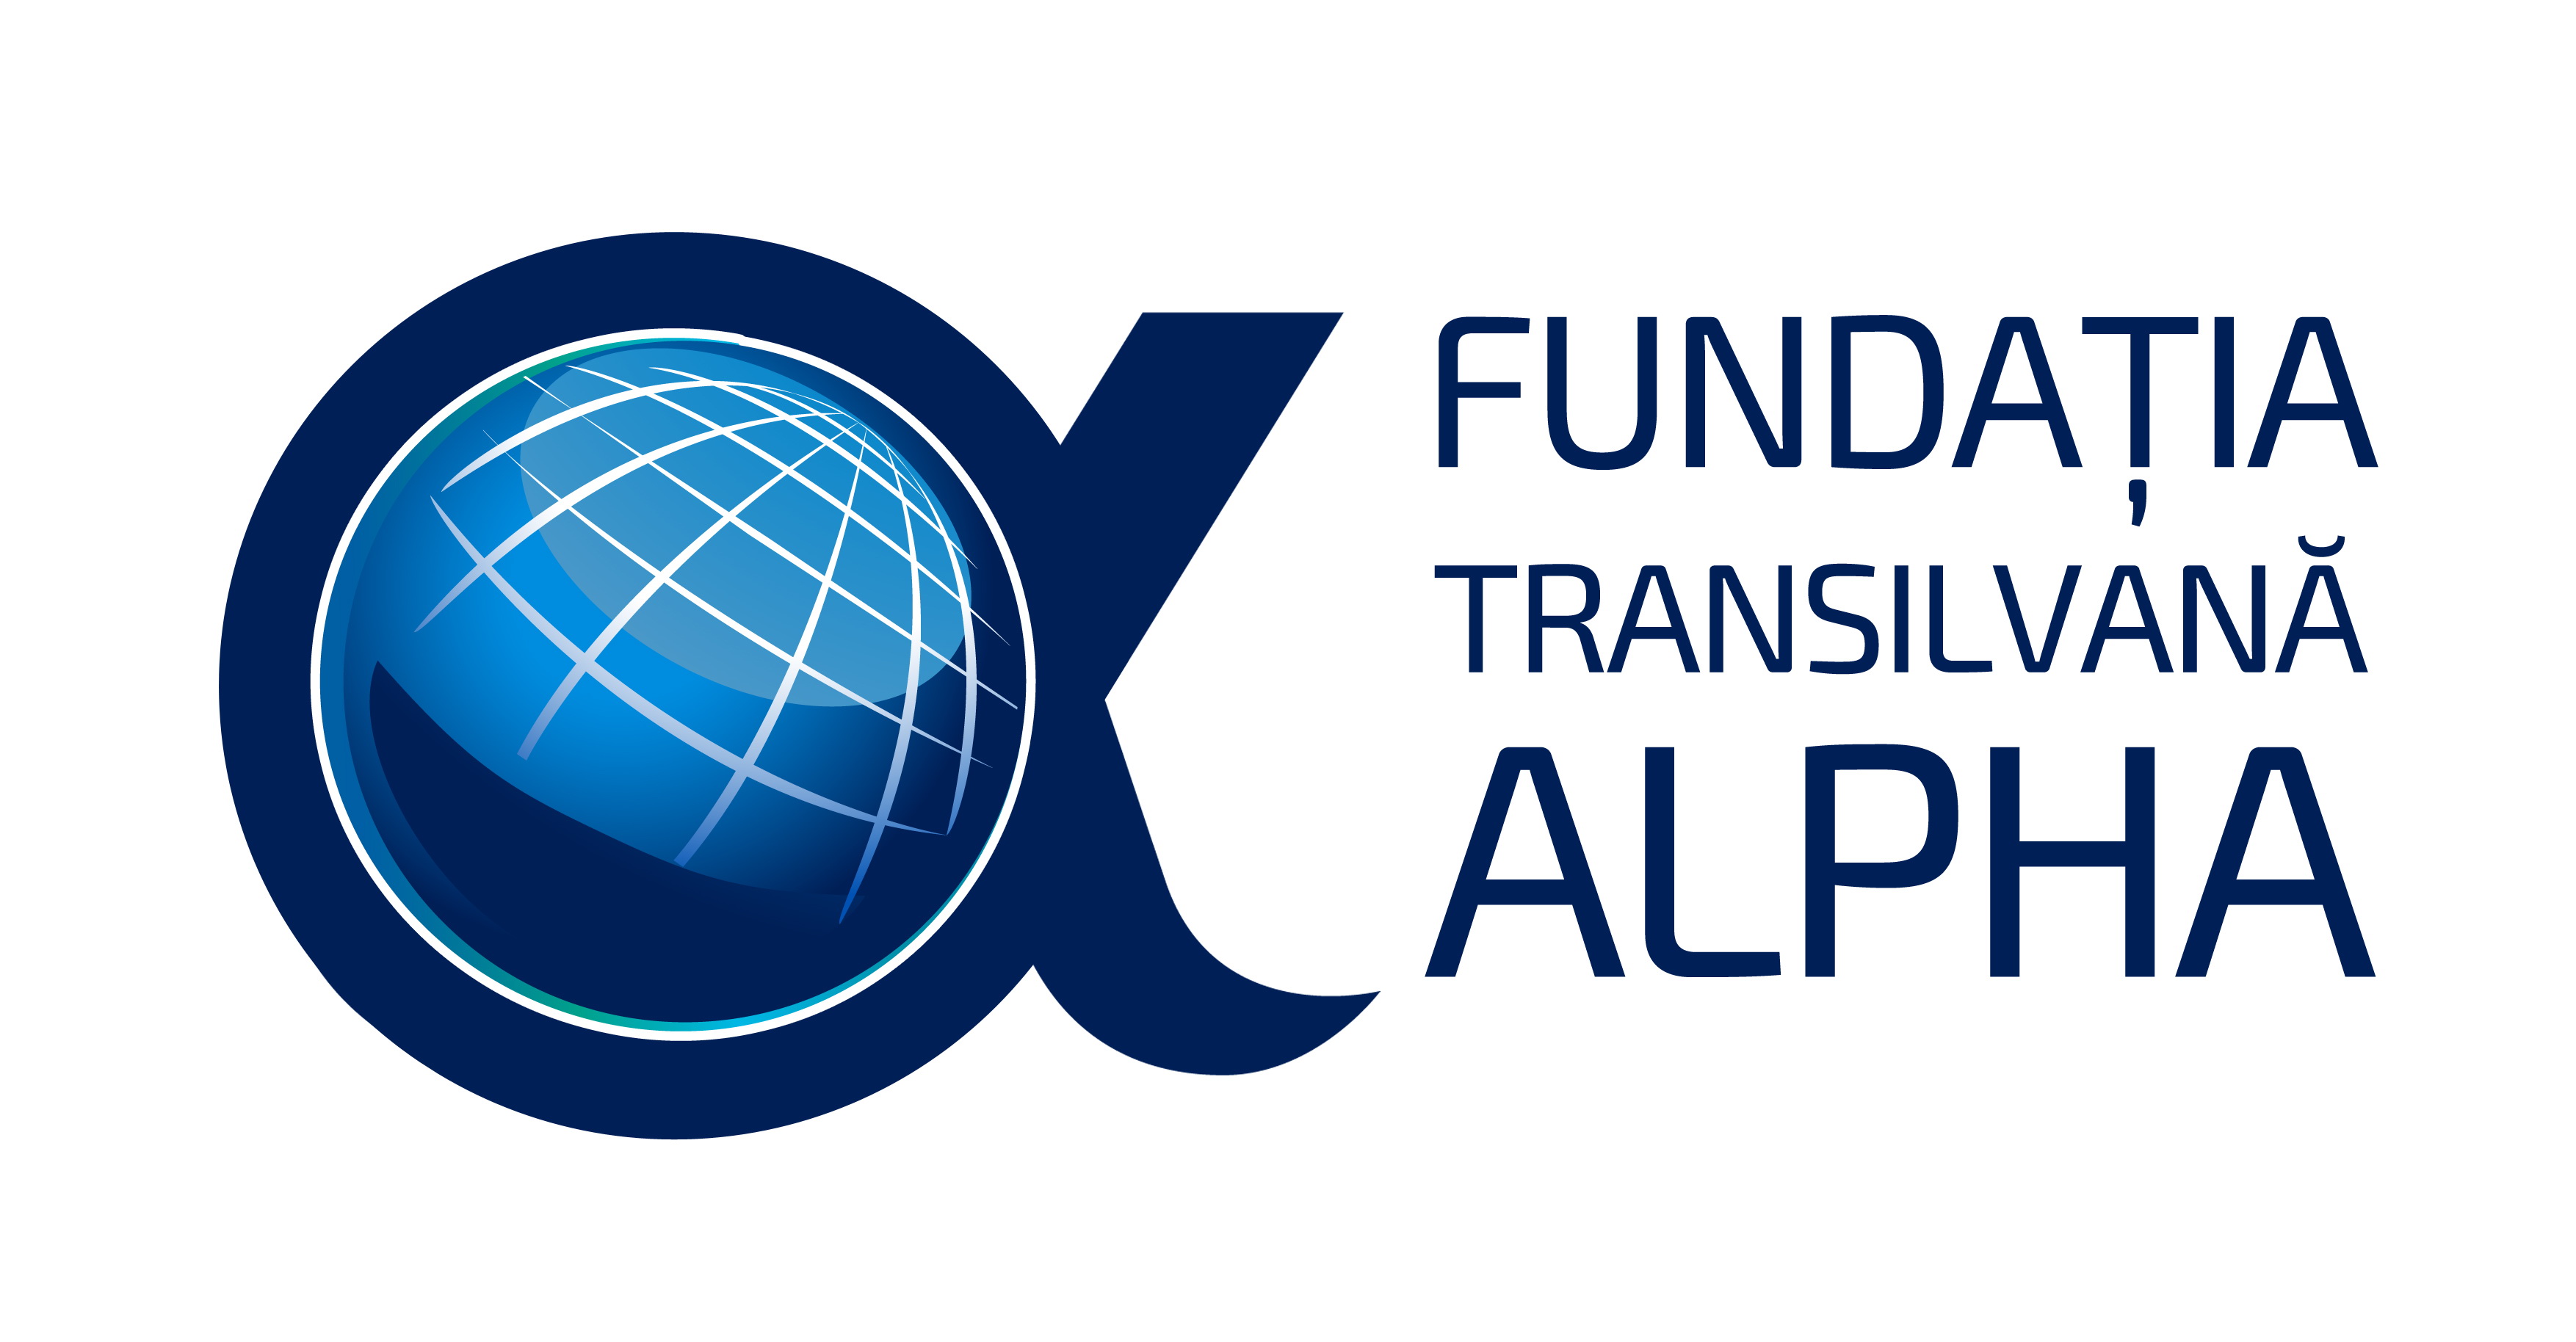 Fundatia Transilvana Alpha logo